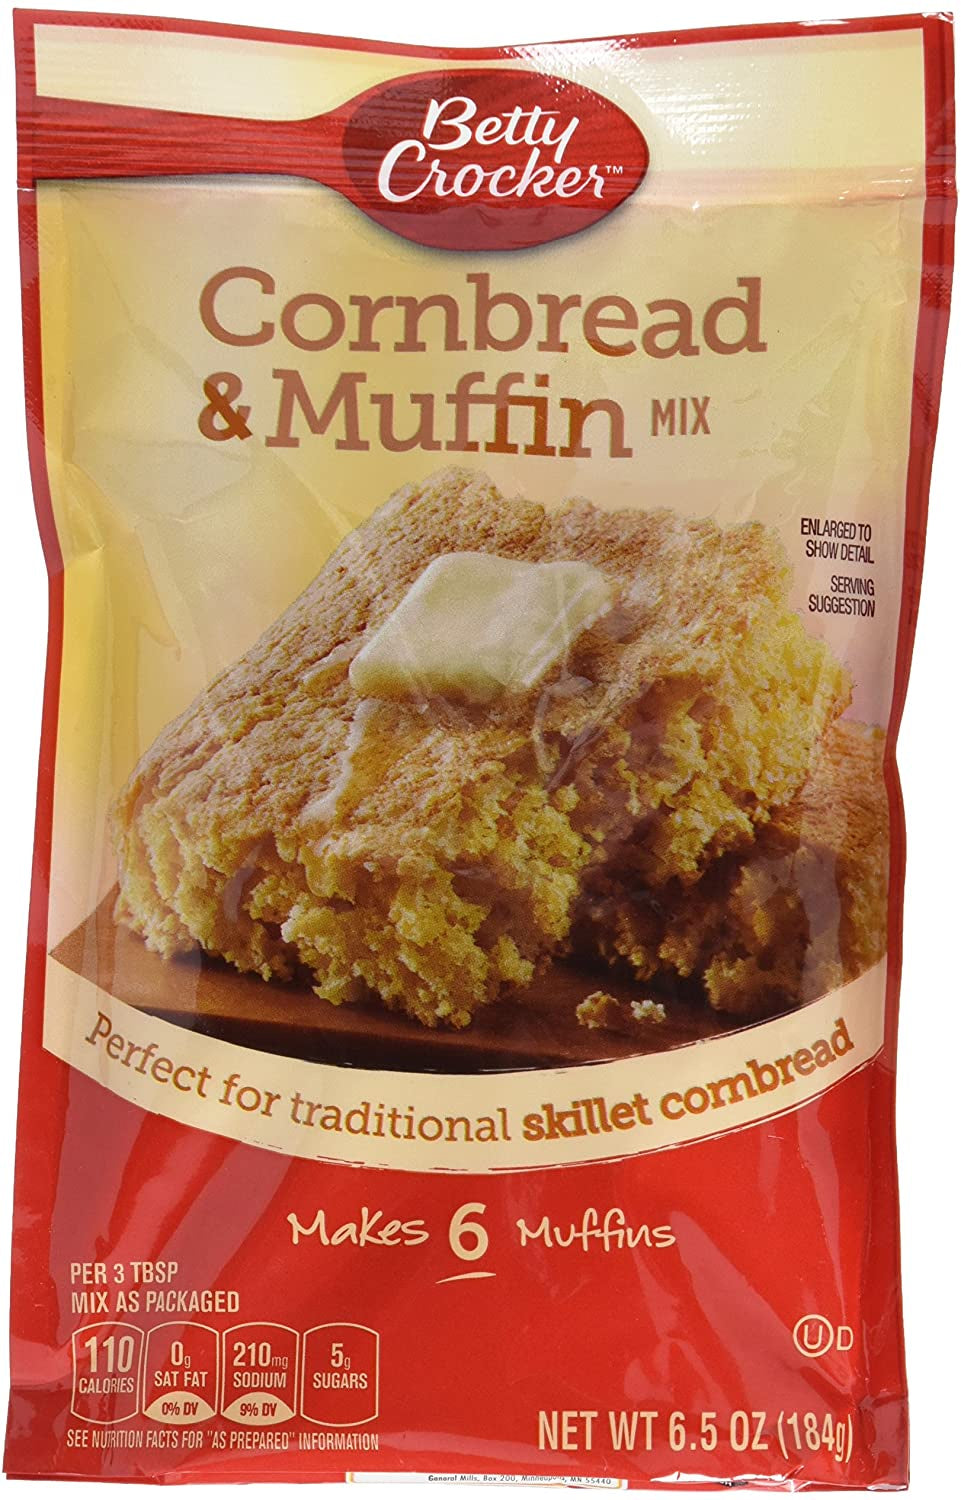 BETTY CROCKER Cornbread & Muffin Mix 6.5oz